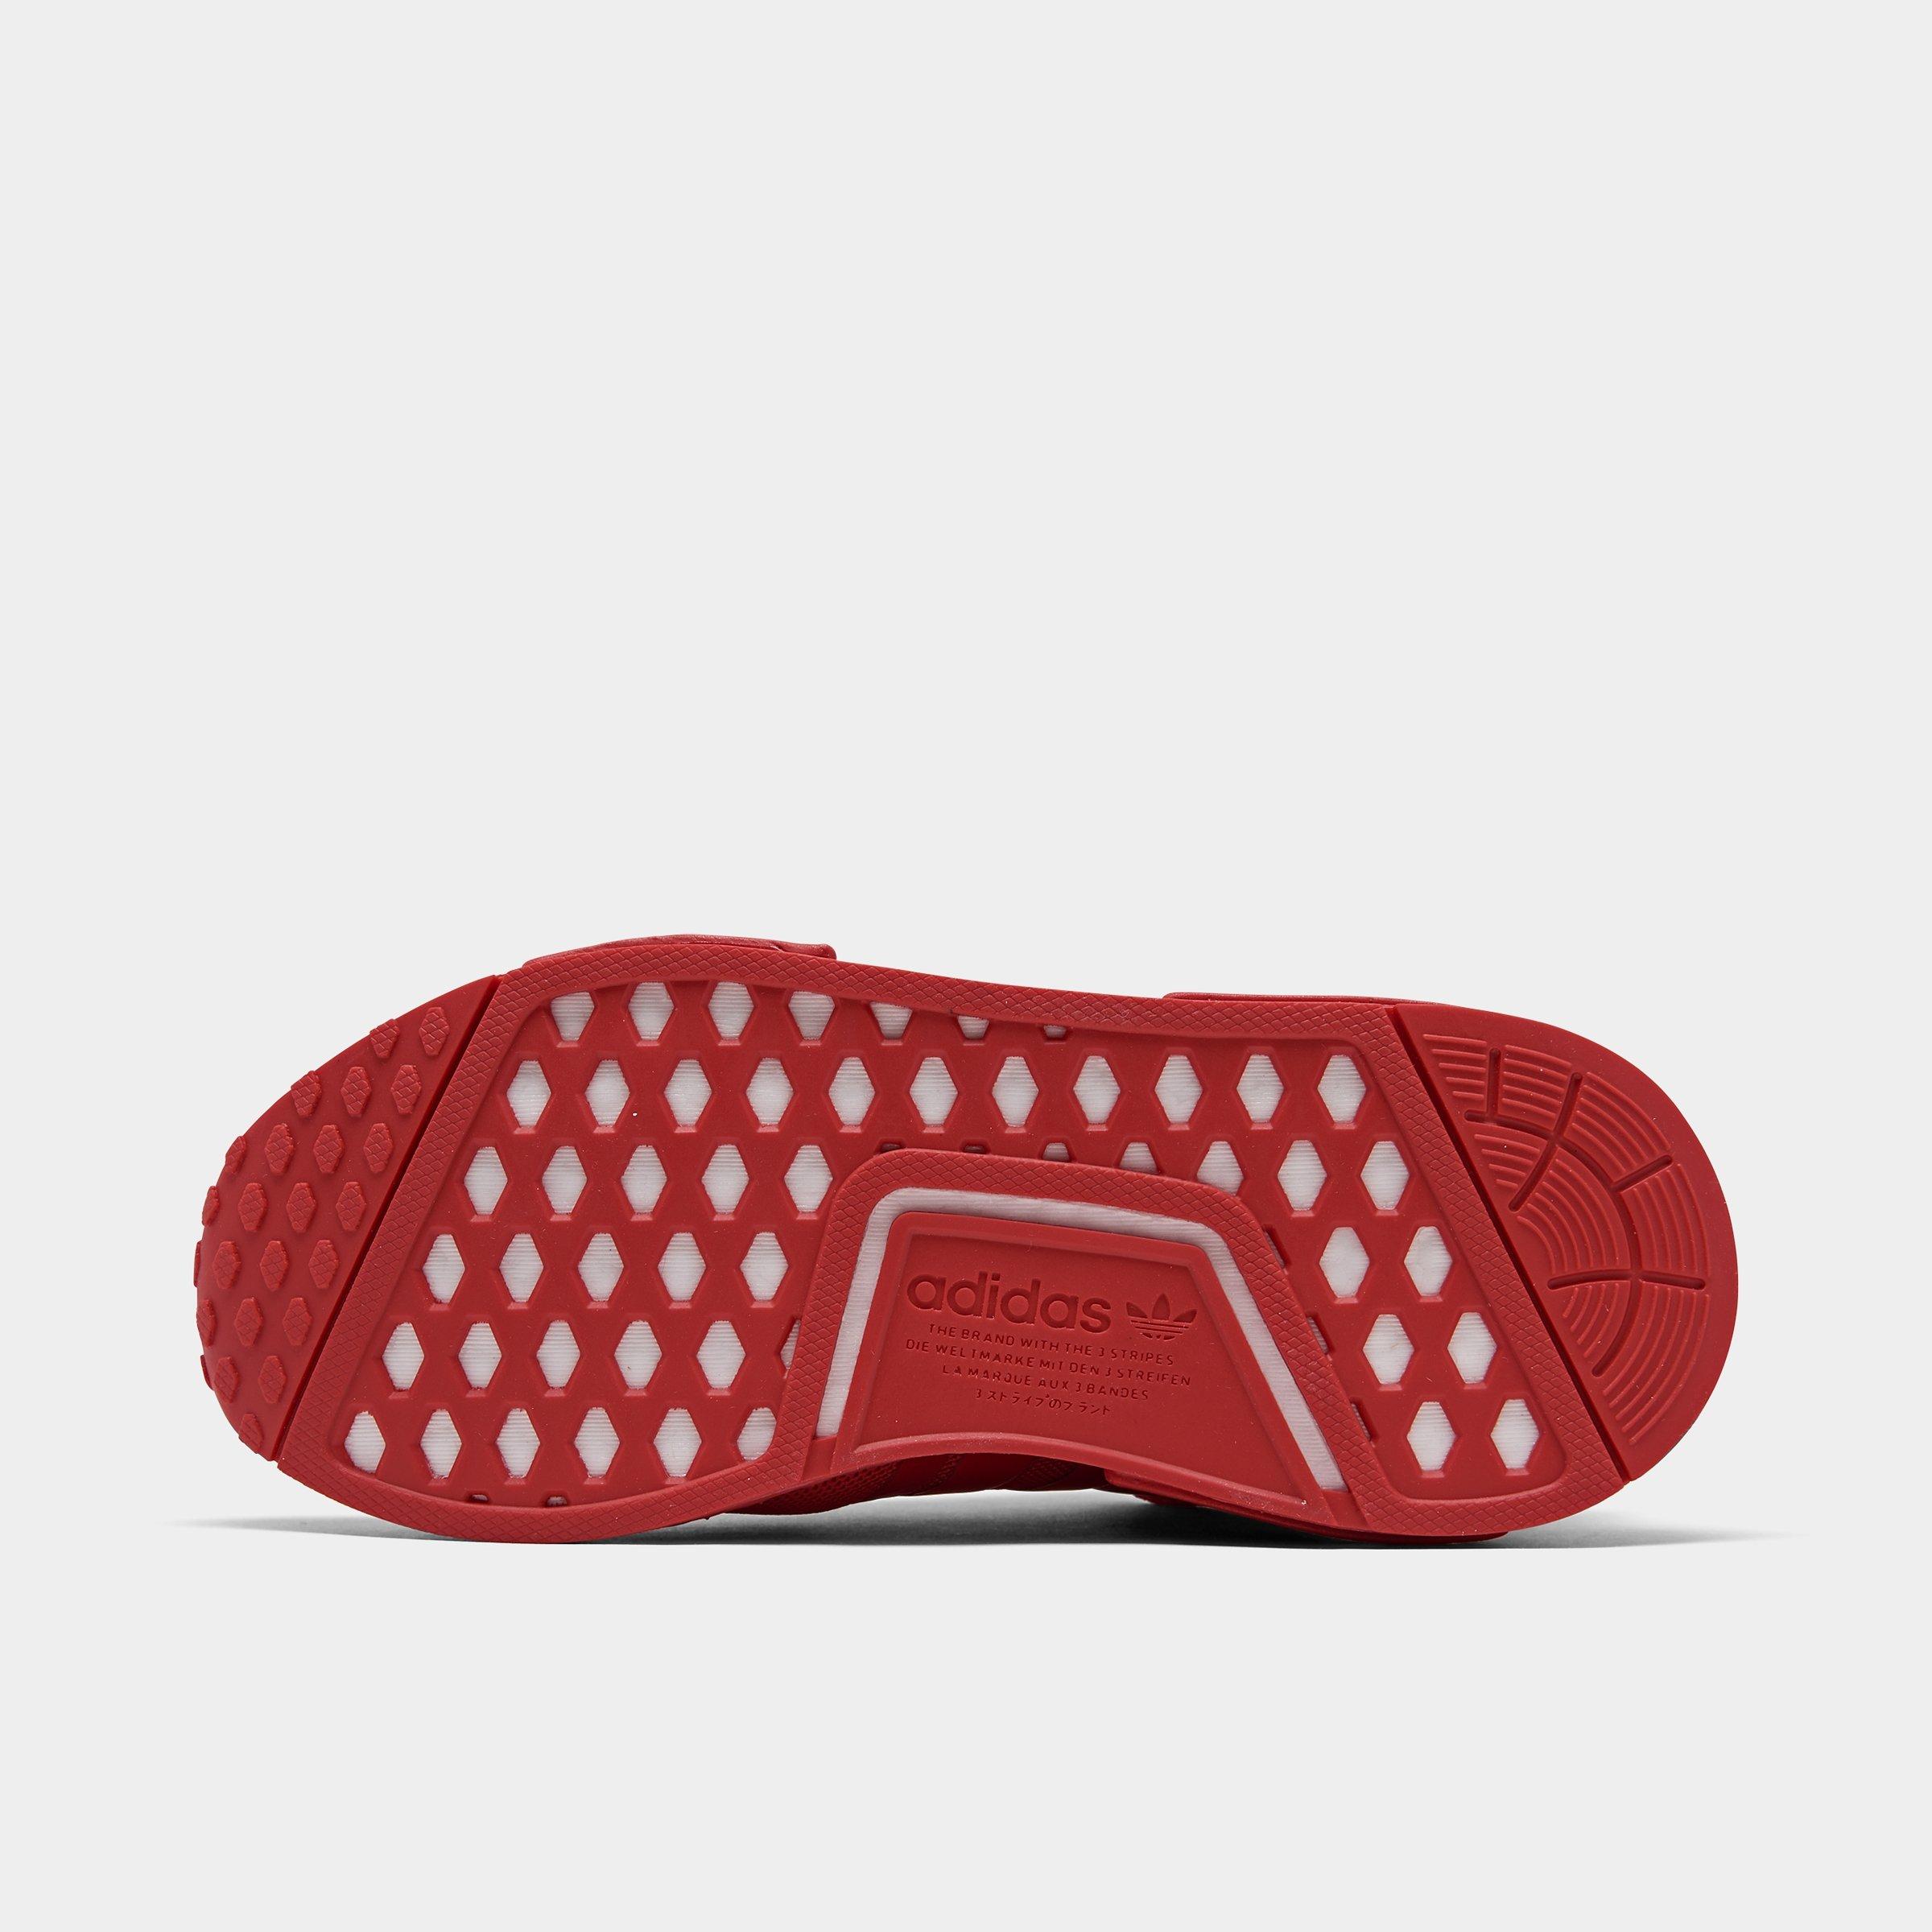 adidas nmd red bottom